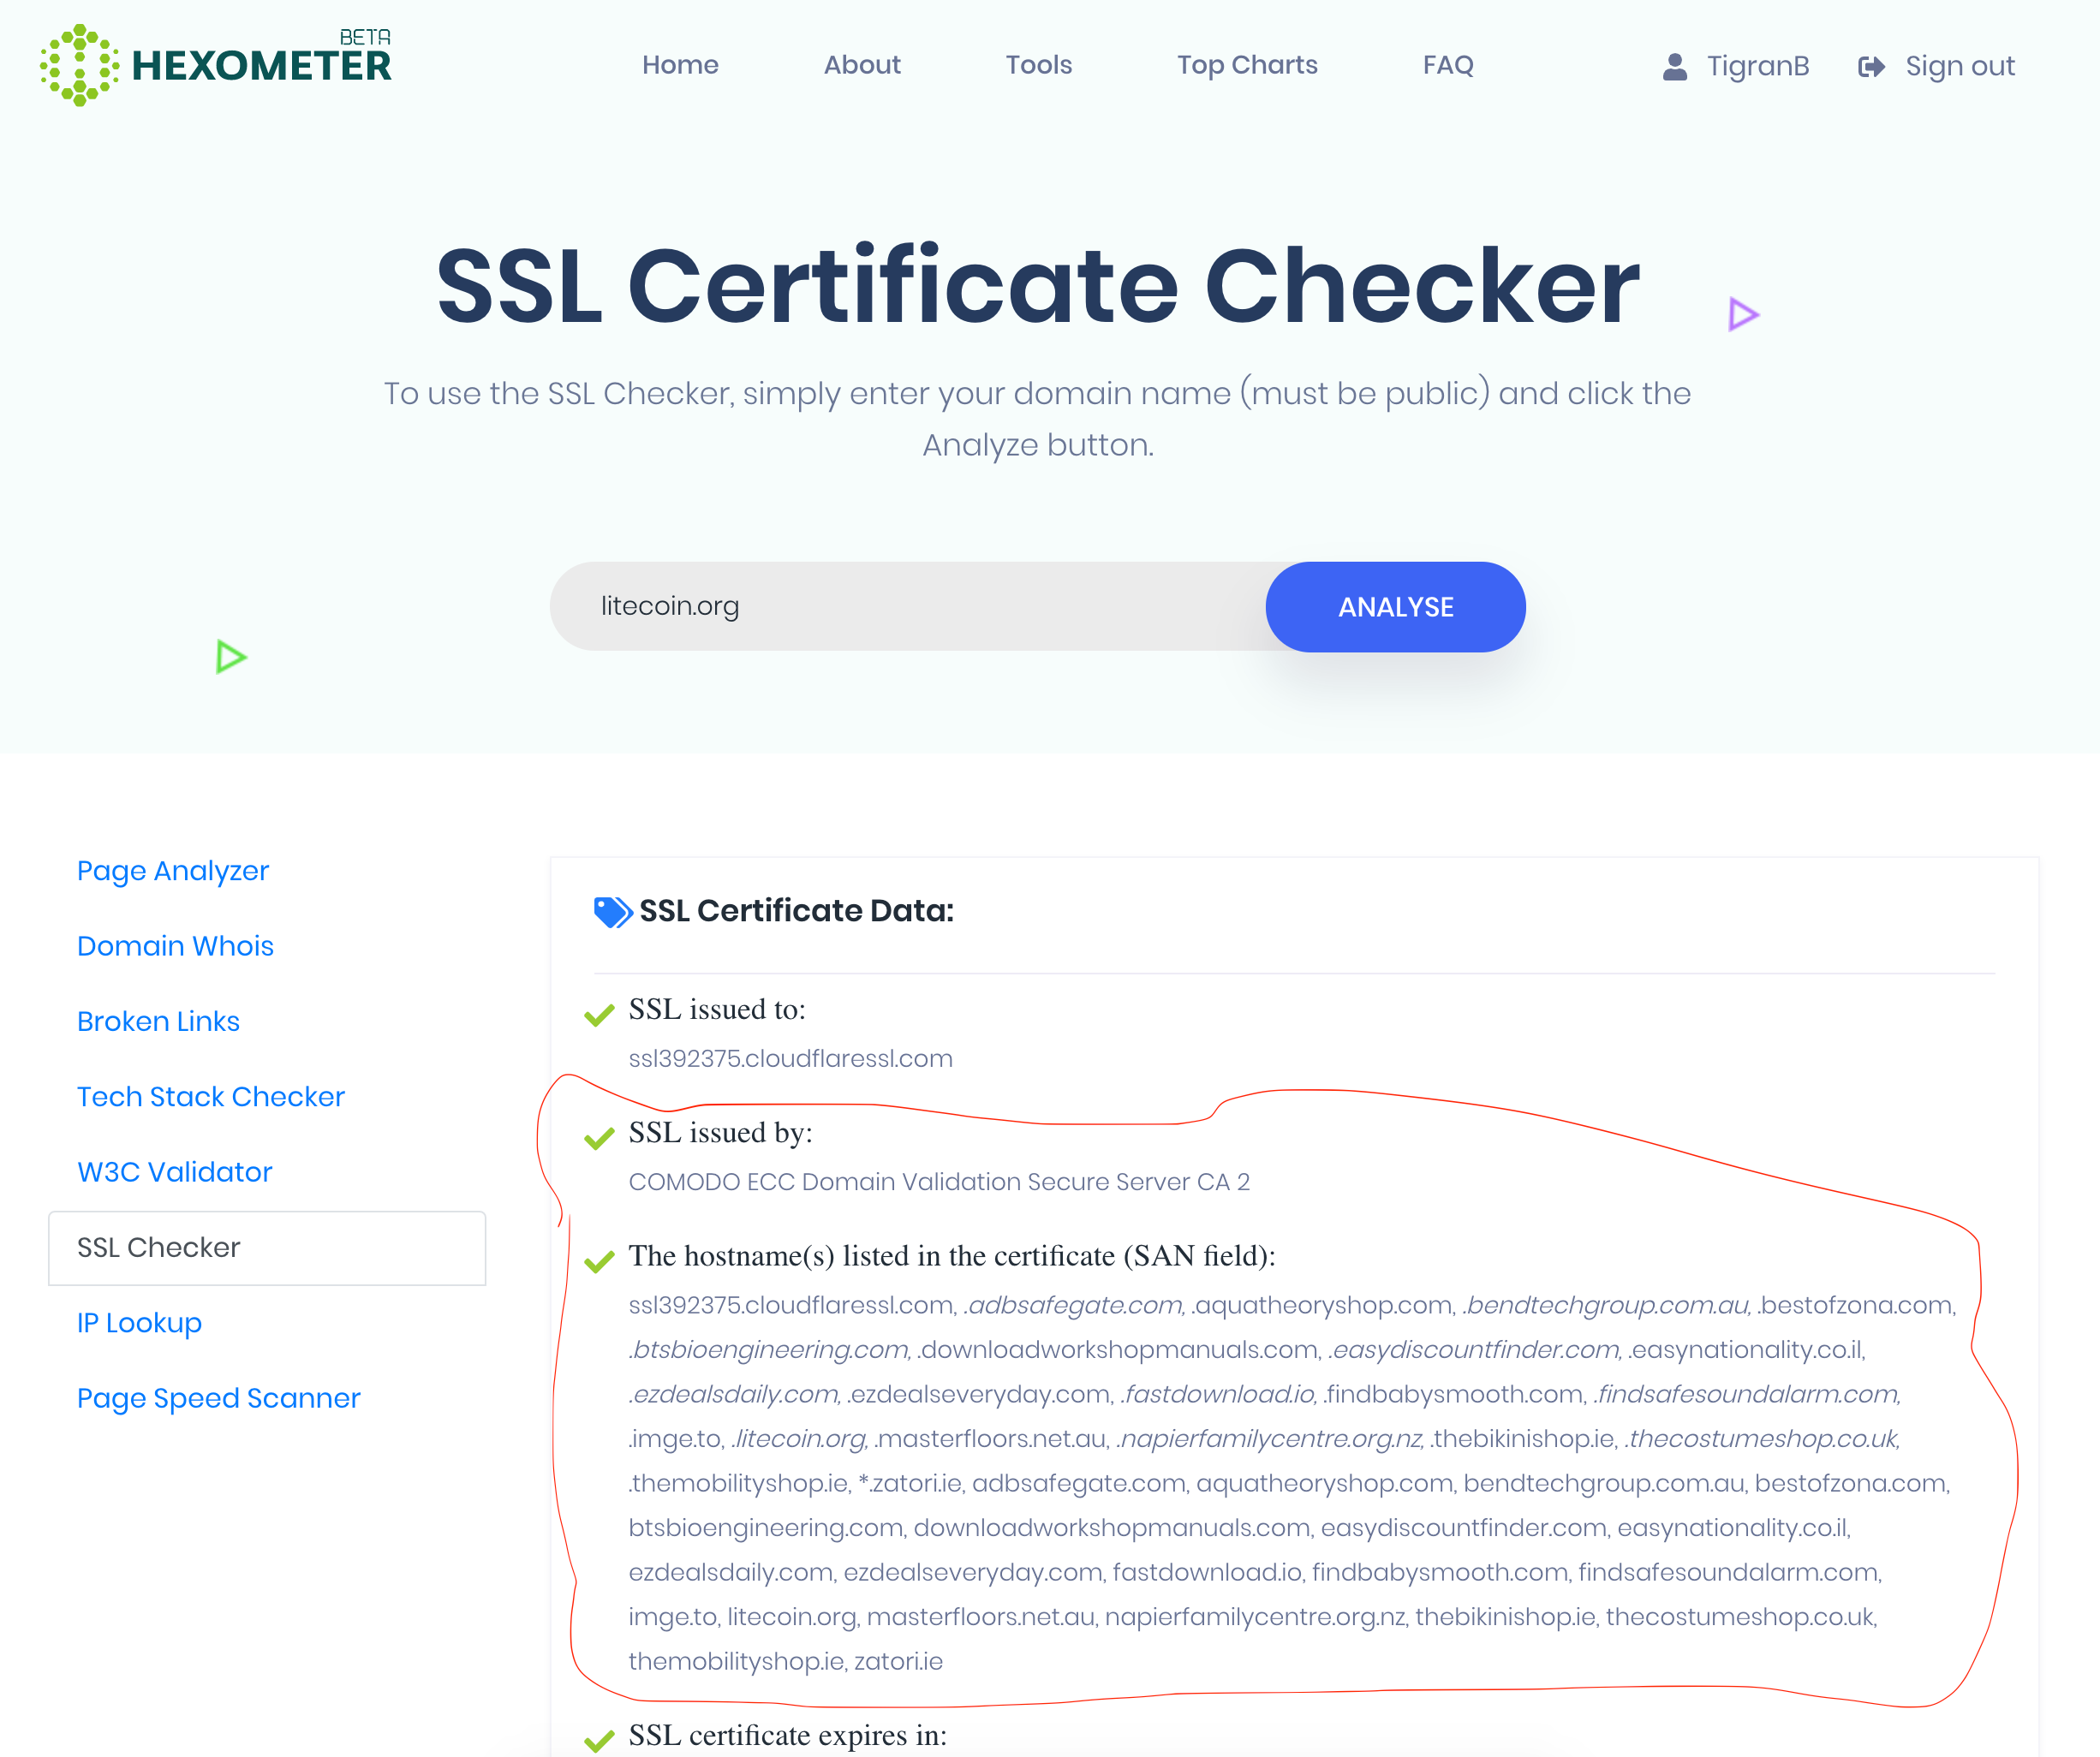 https://hexometer.com/ssl-certificate-checker/litecoin.org